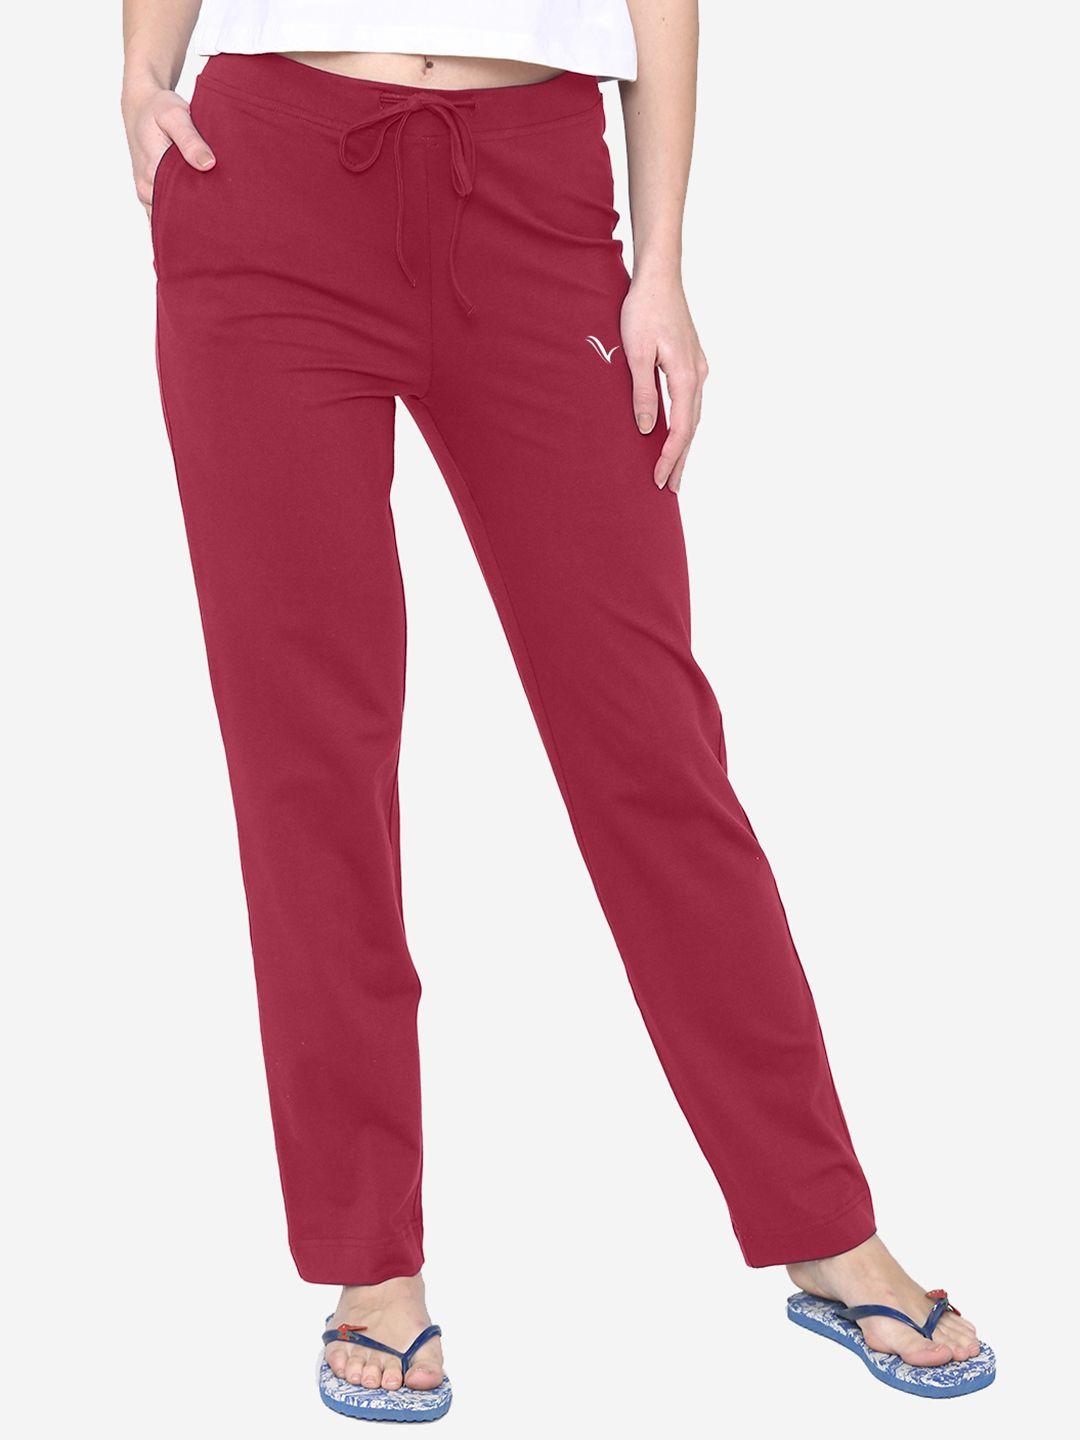 vami-women-red-solid-lounge-pants